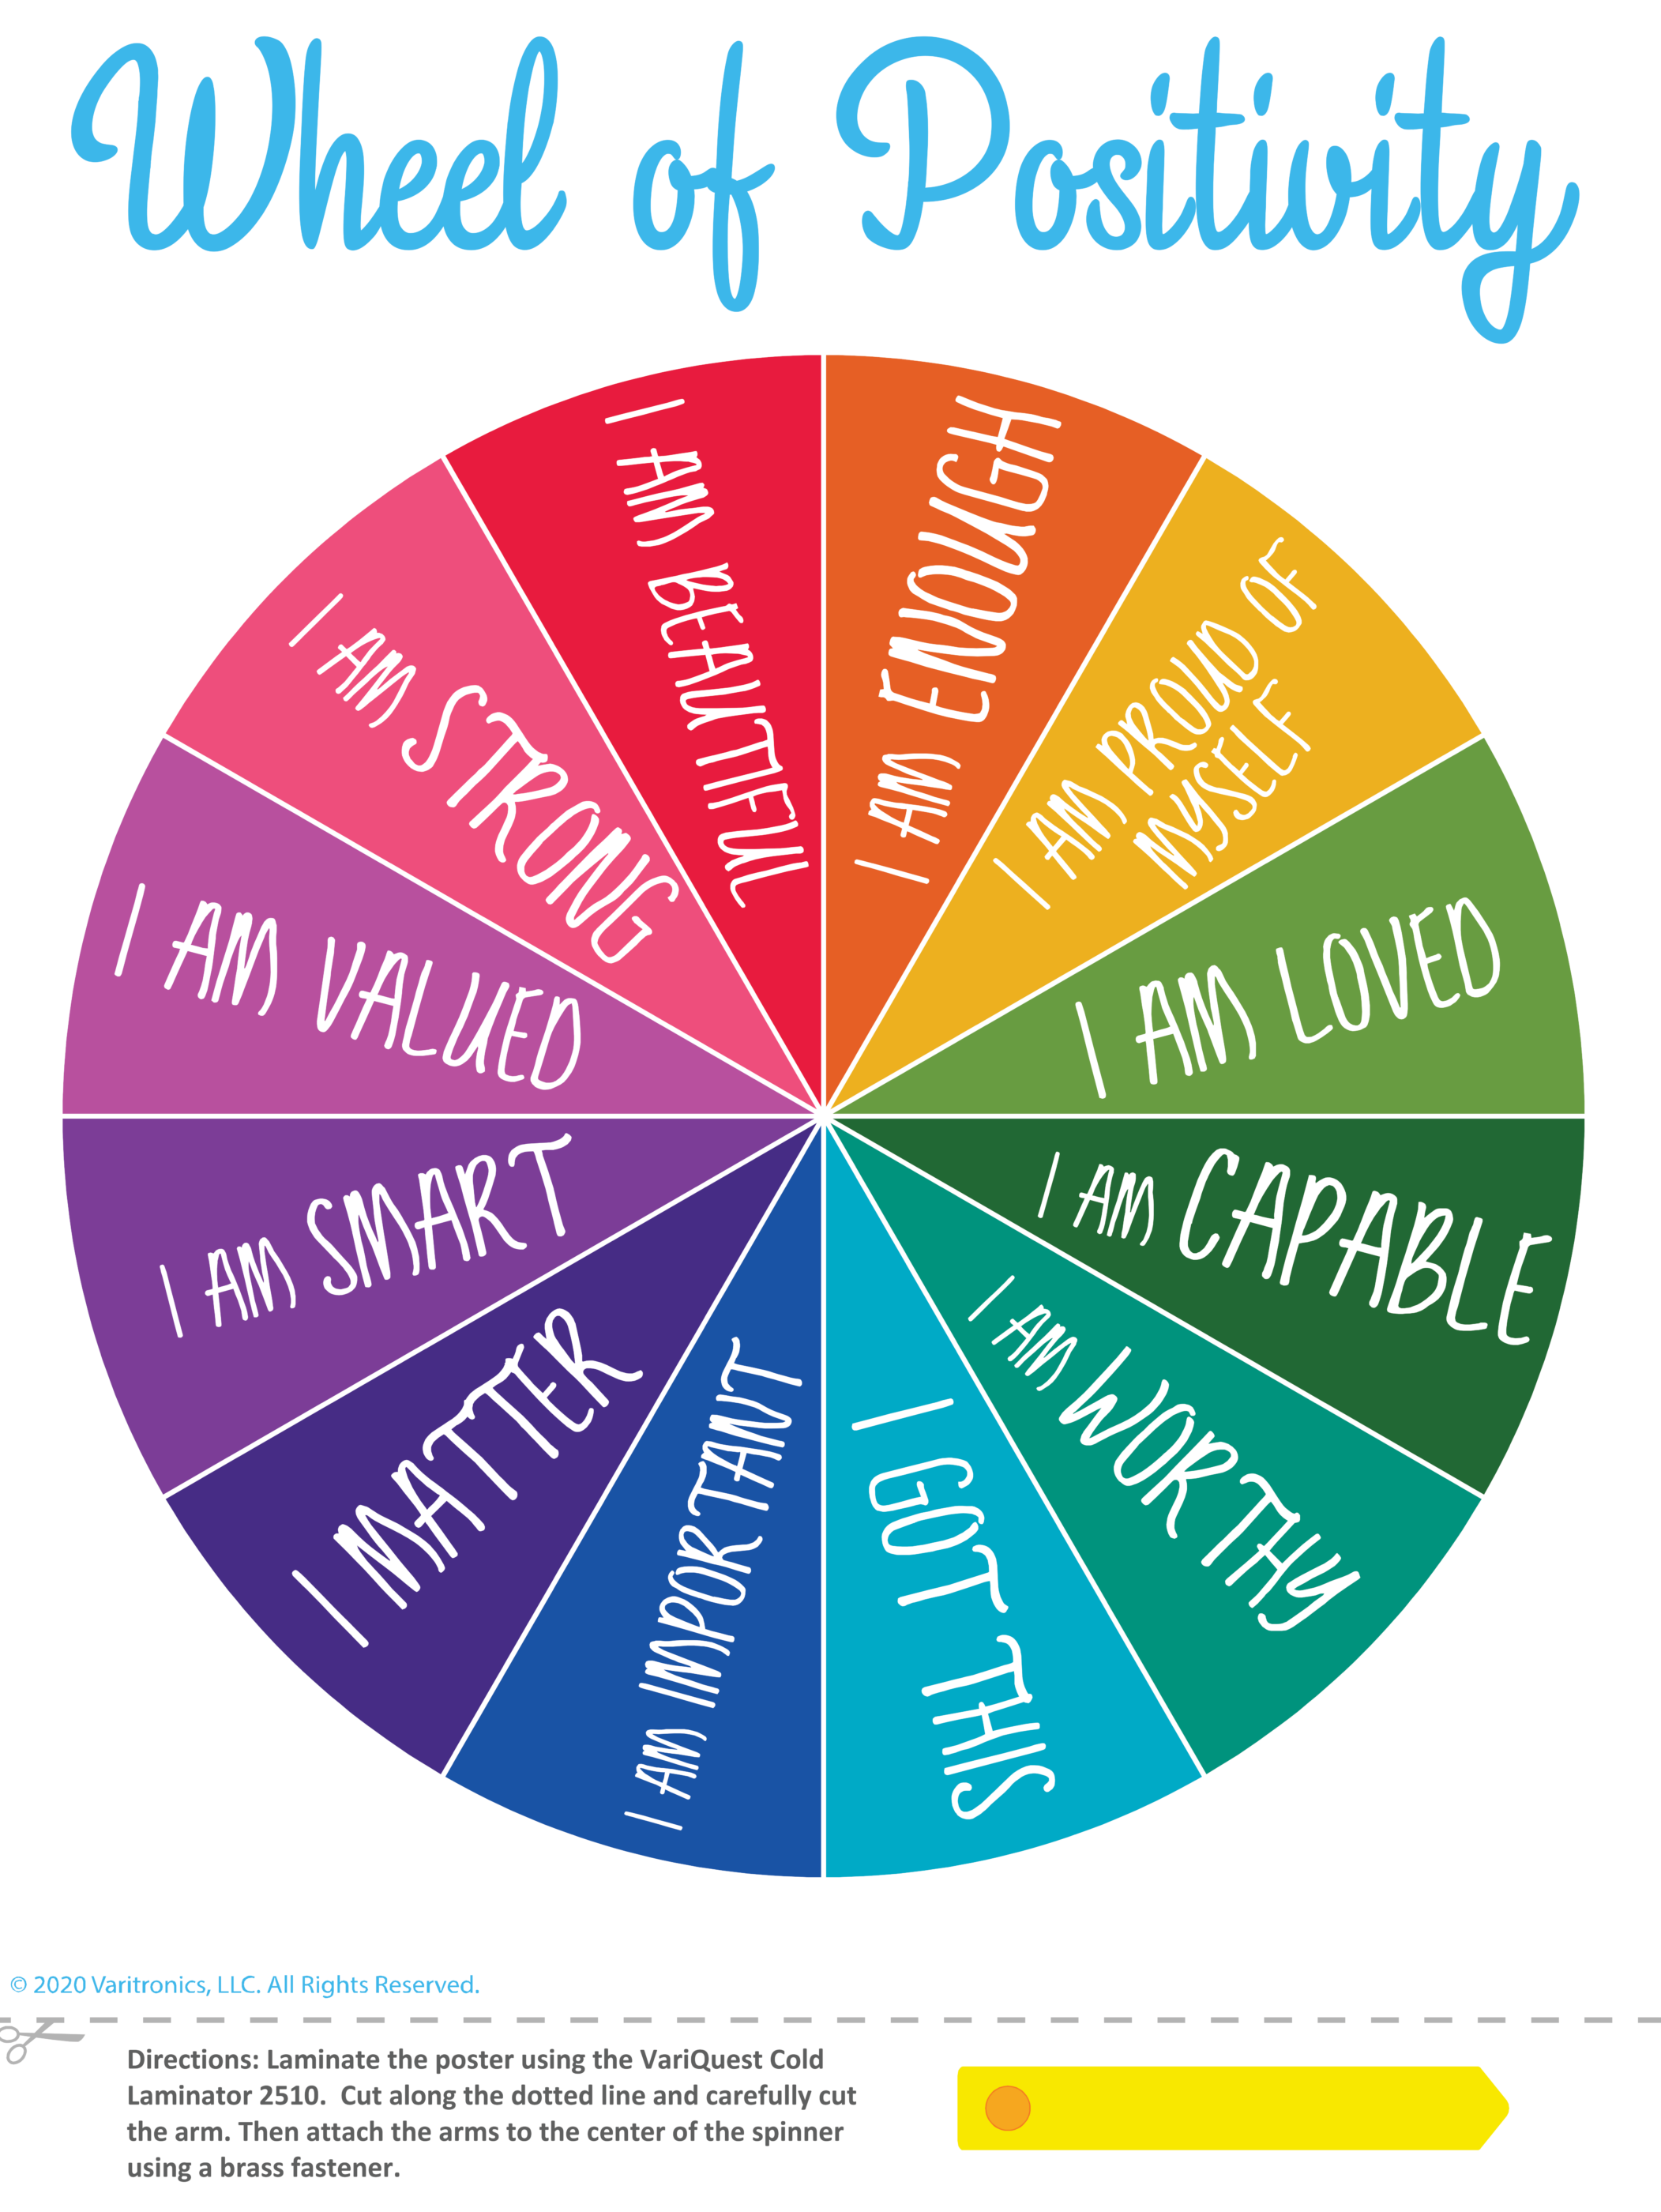 VariQuest perfecta output wheel of positivity